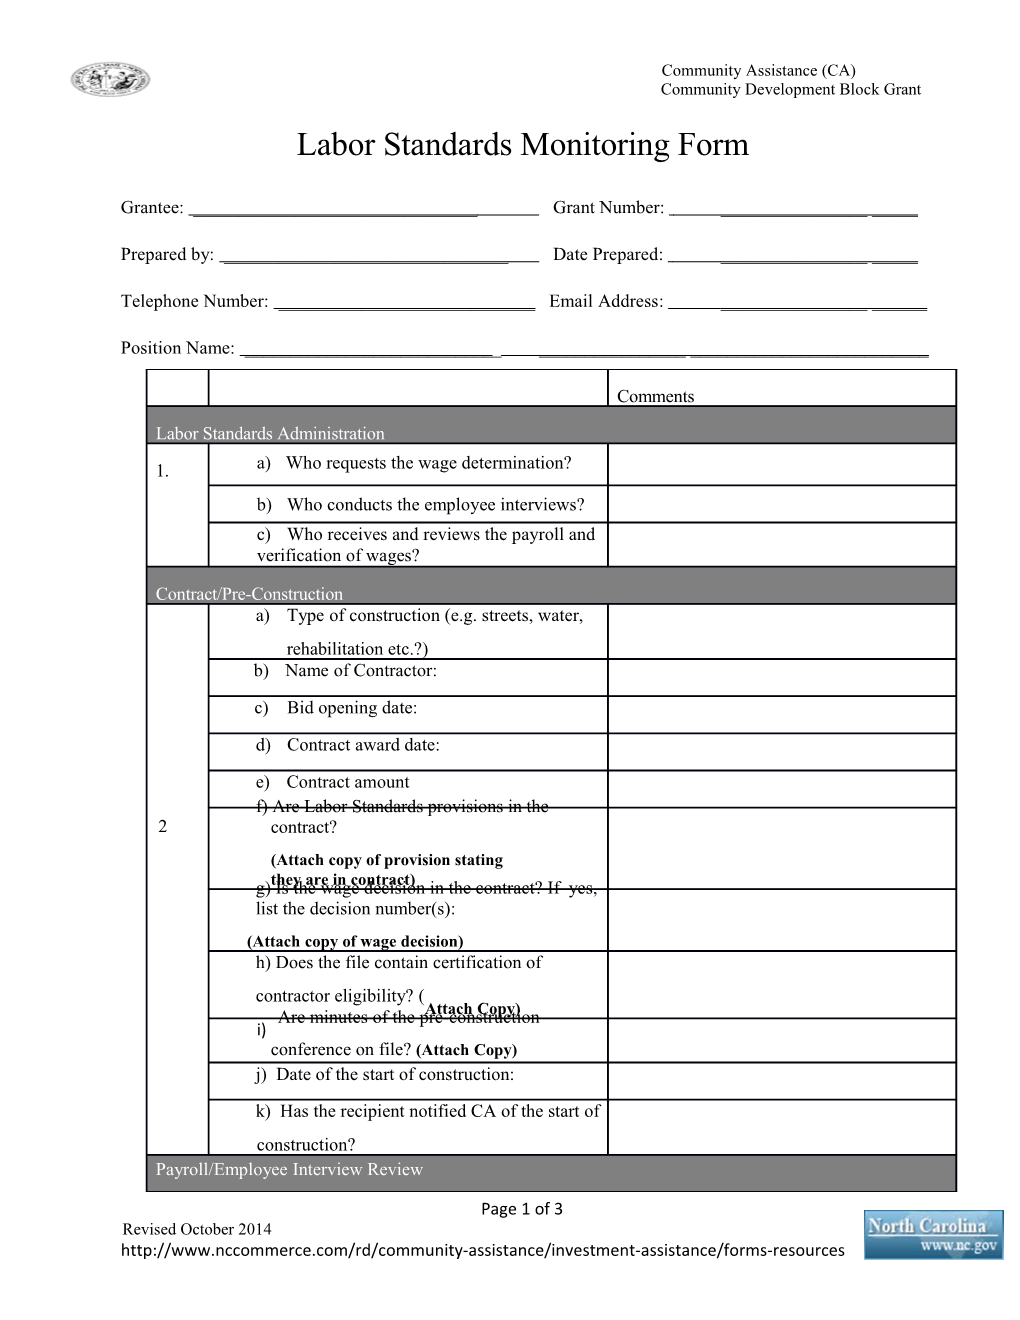 Labor Standards Monitoring Form